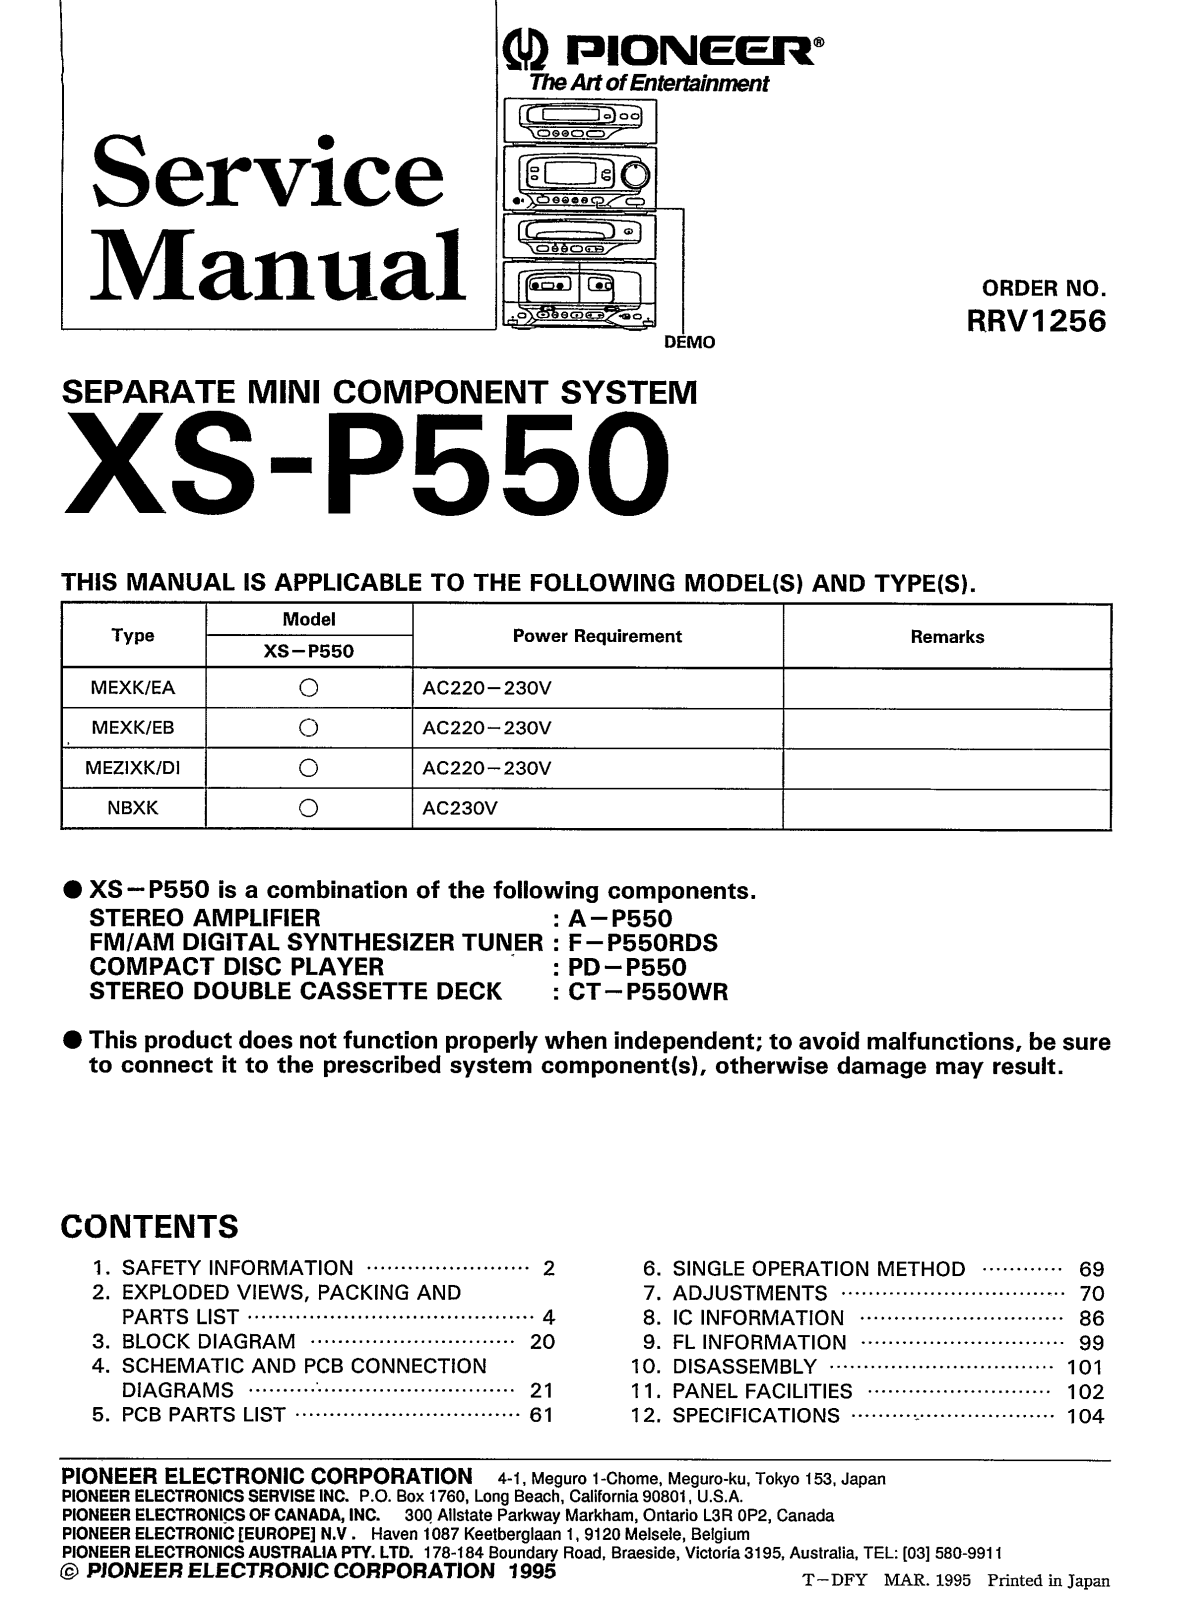 Pioneer XSP-550 Service manual